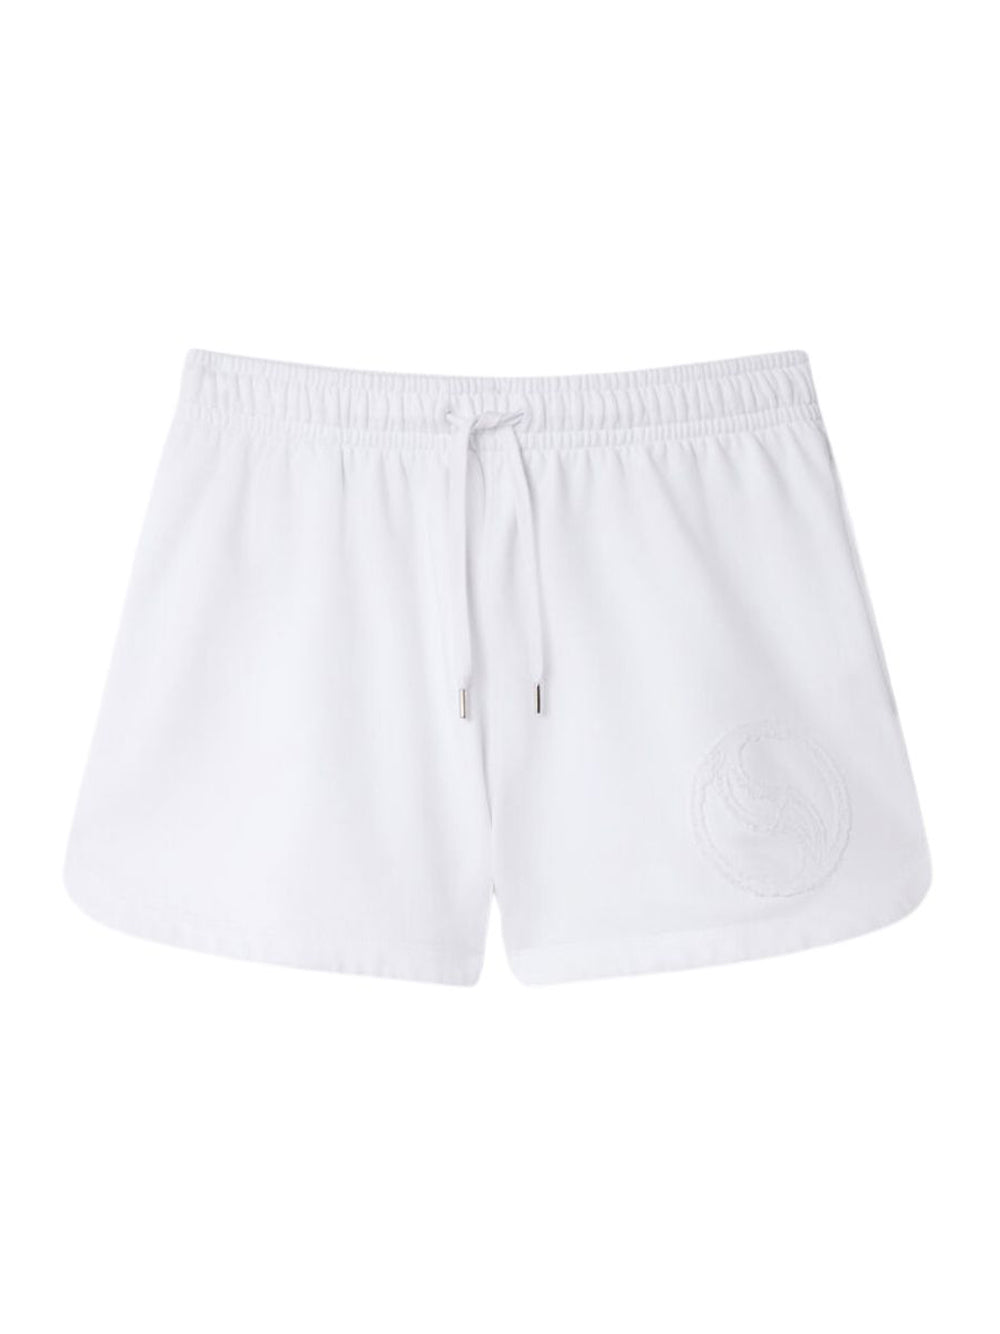 STELLAMCCARTNEY-S-Wave-Jersey-Drawstring-Shorts-Pure-White-01